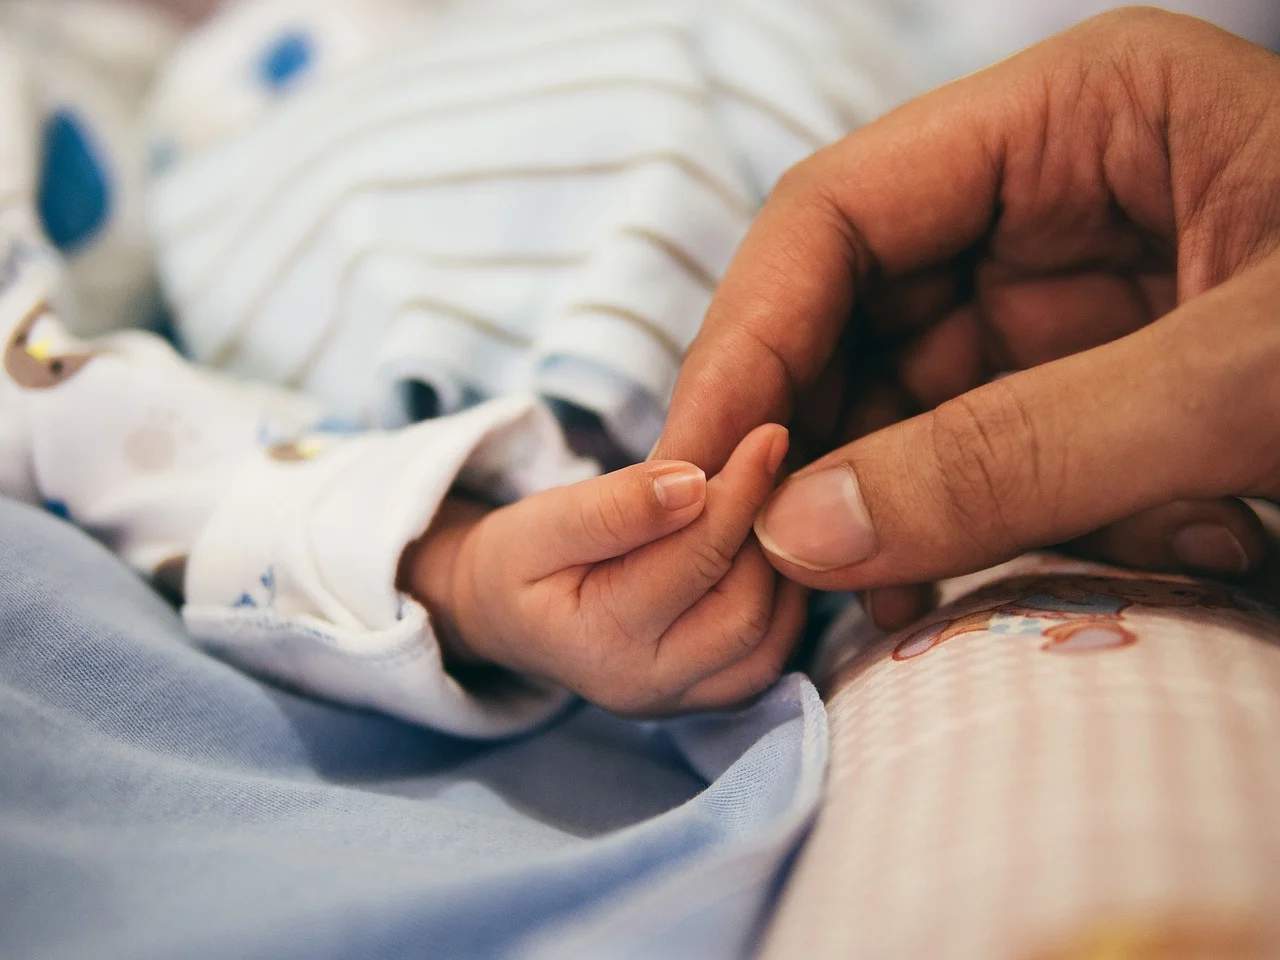 U-M researchers: Parent visitation should not be restricted at pediatric hospitals